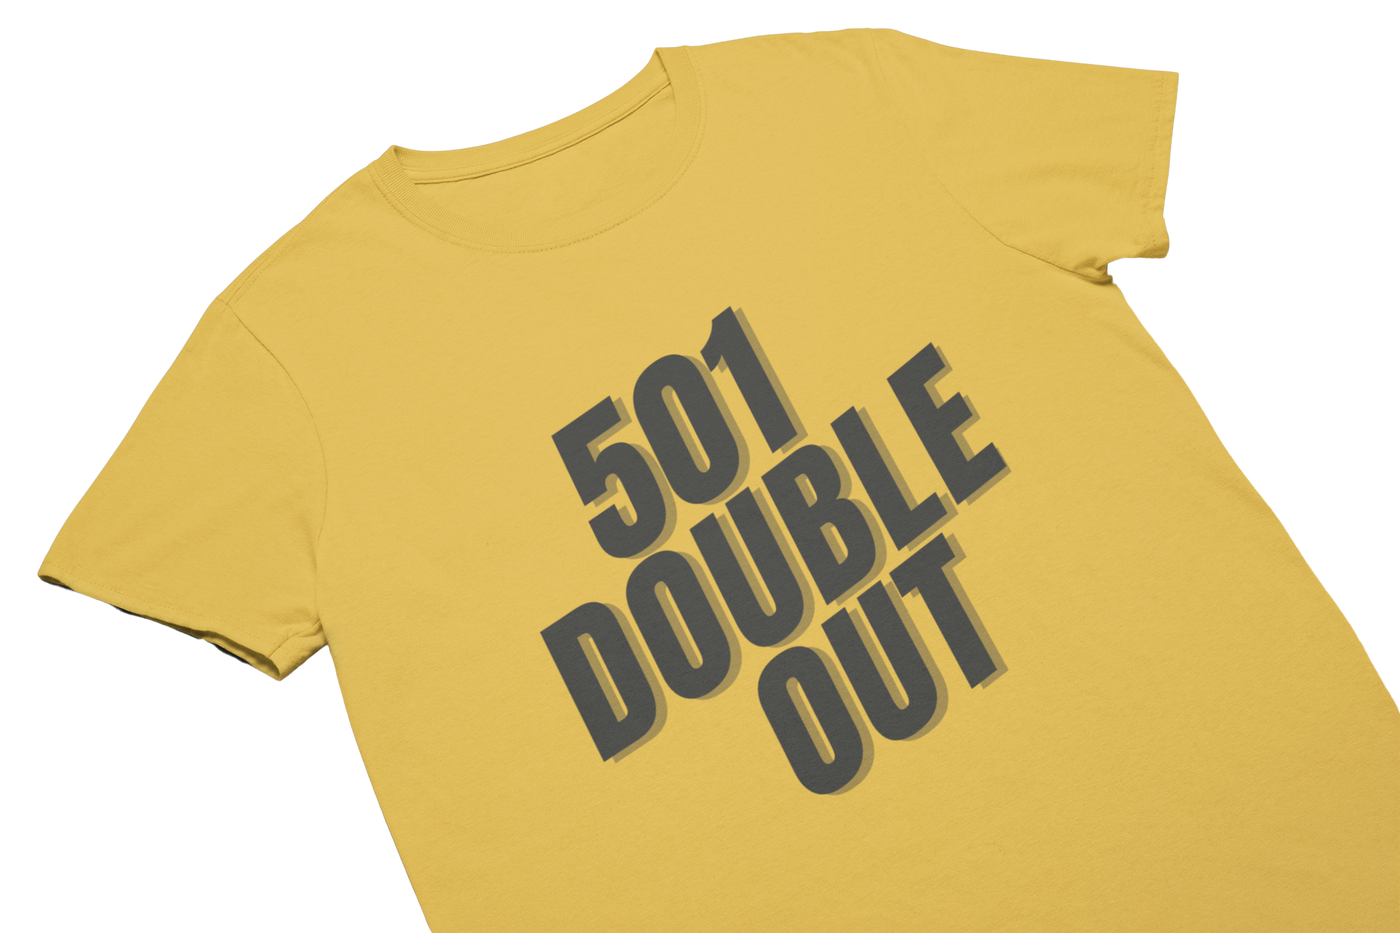 501 DOUBLE OUT (Schwarz) - T-Shirt Gold